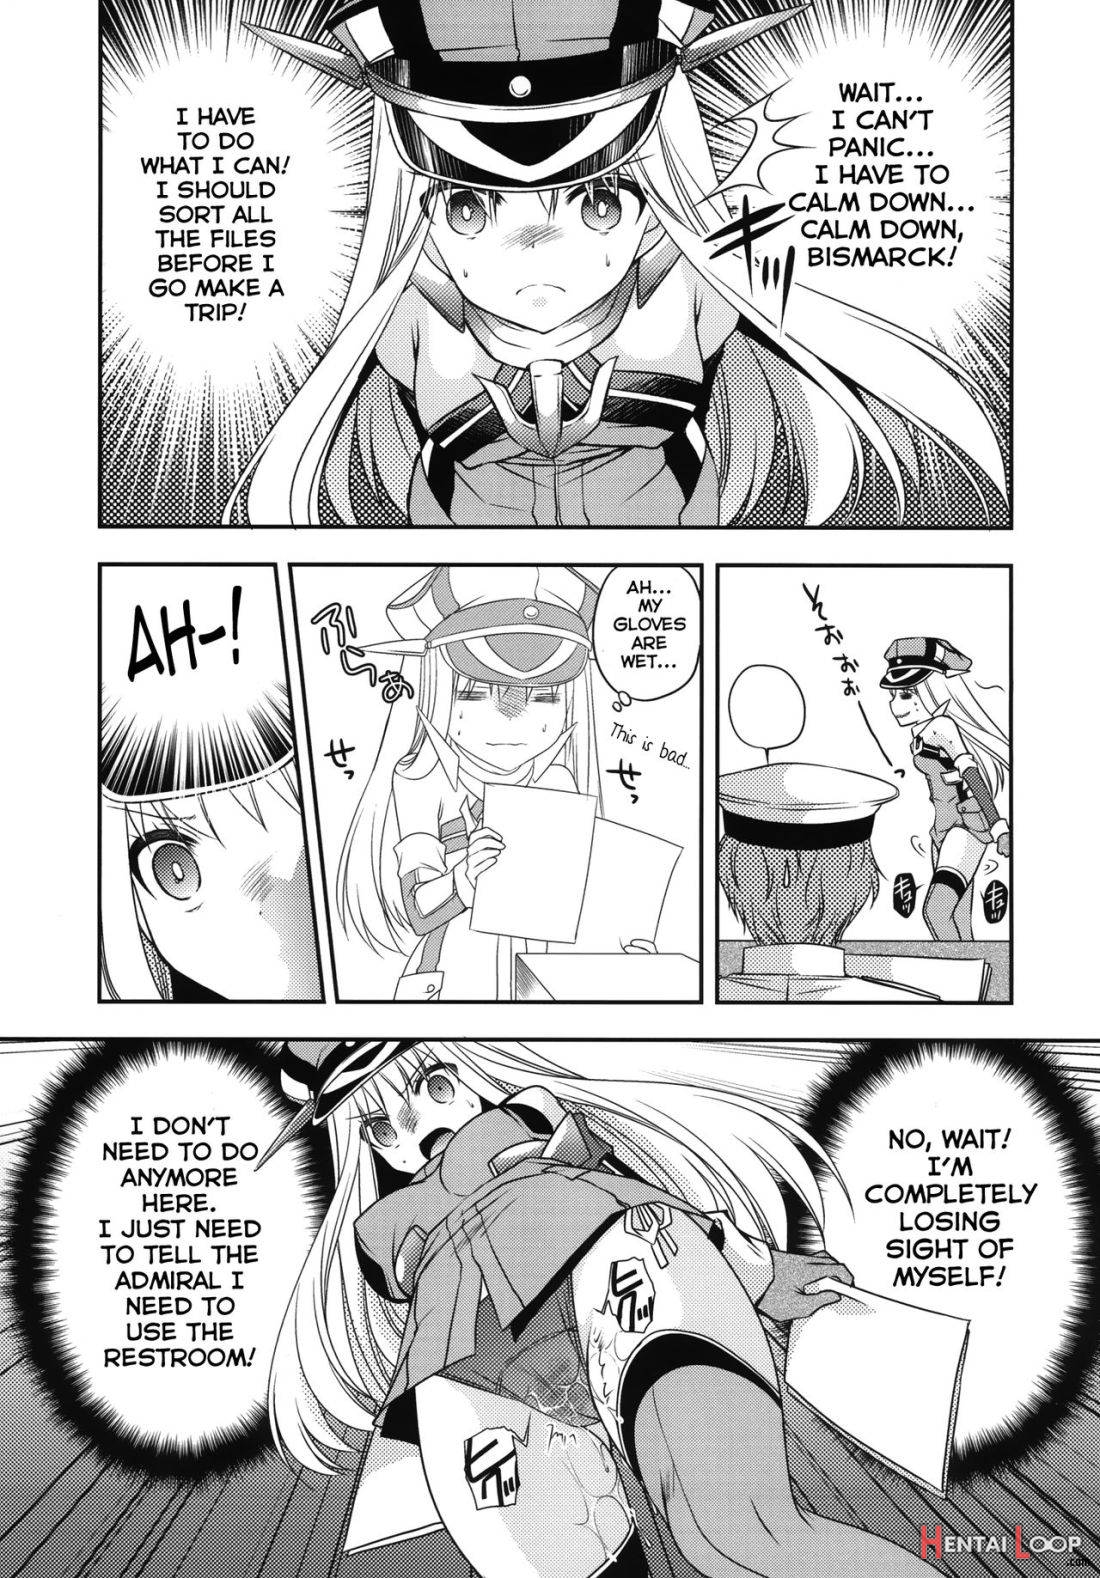 Omorashi Bismarck page 12